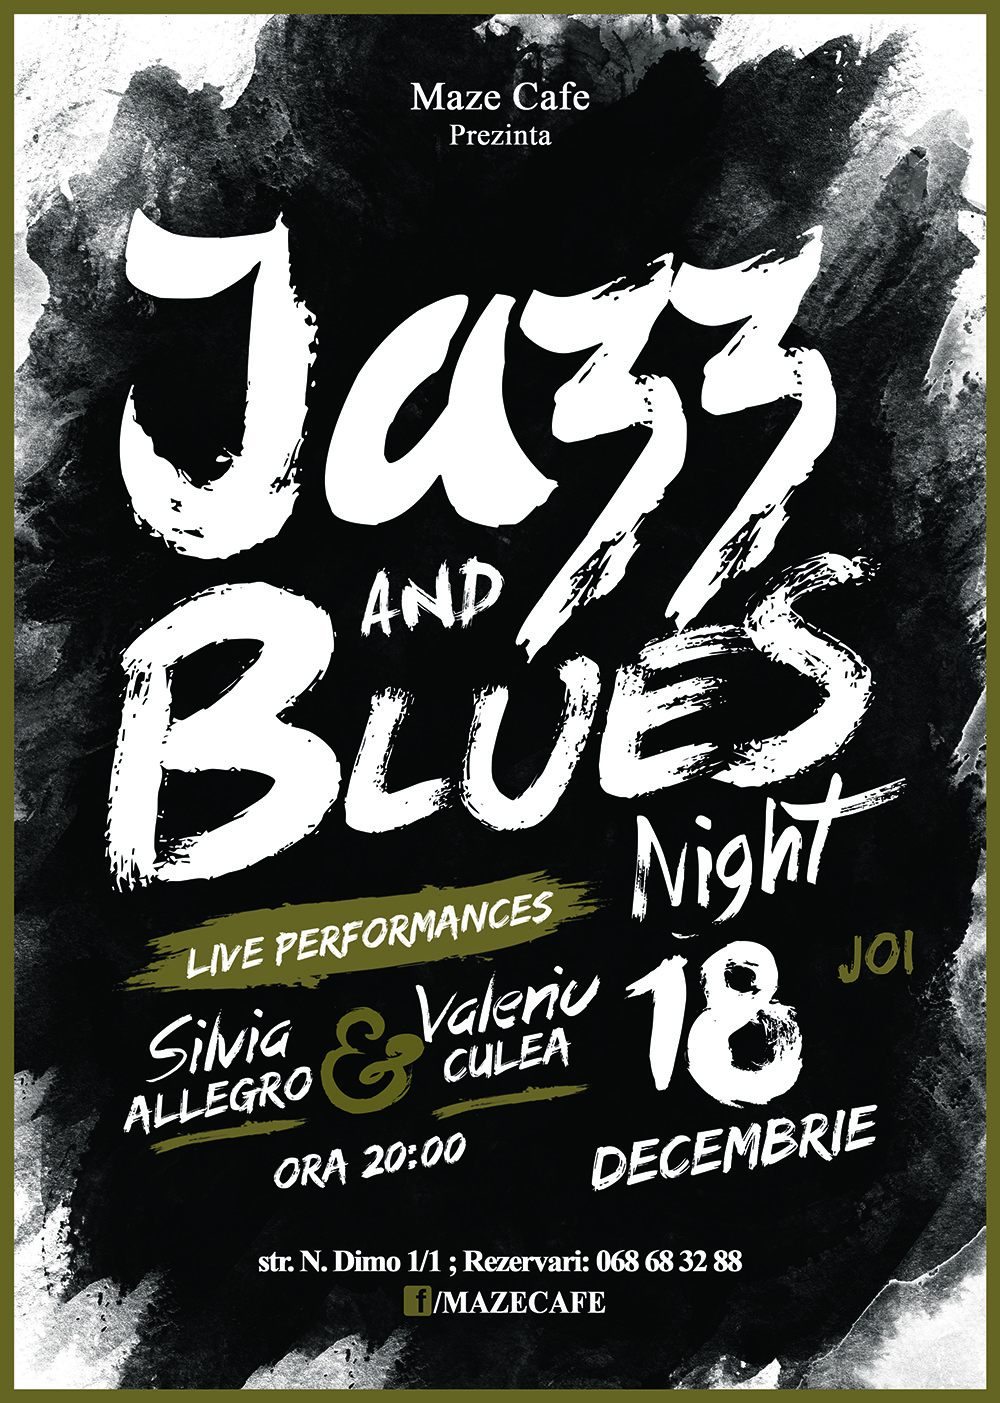 Jazz and Blues Night